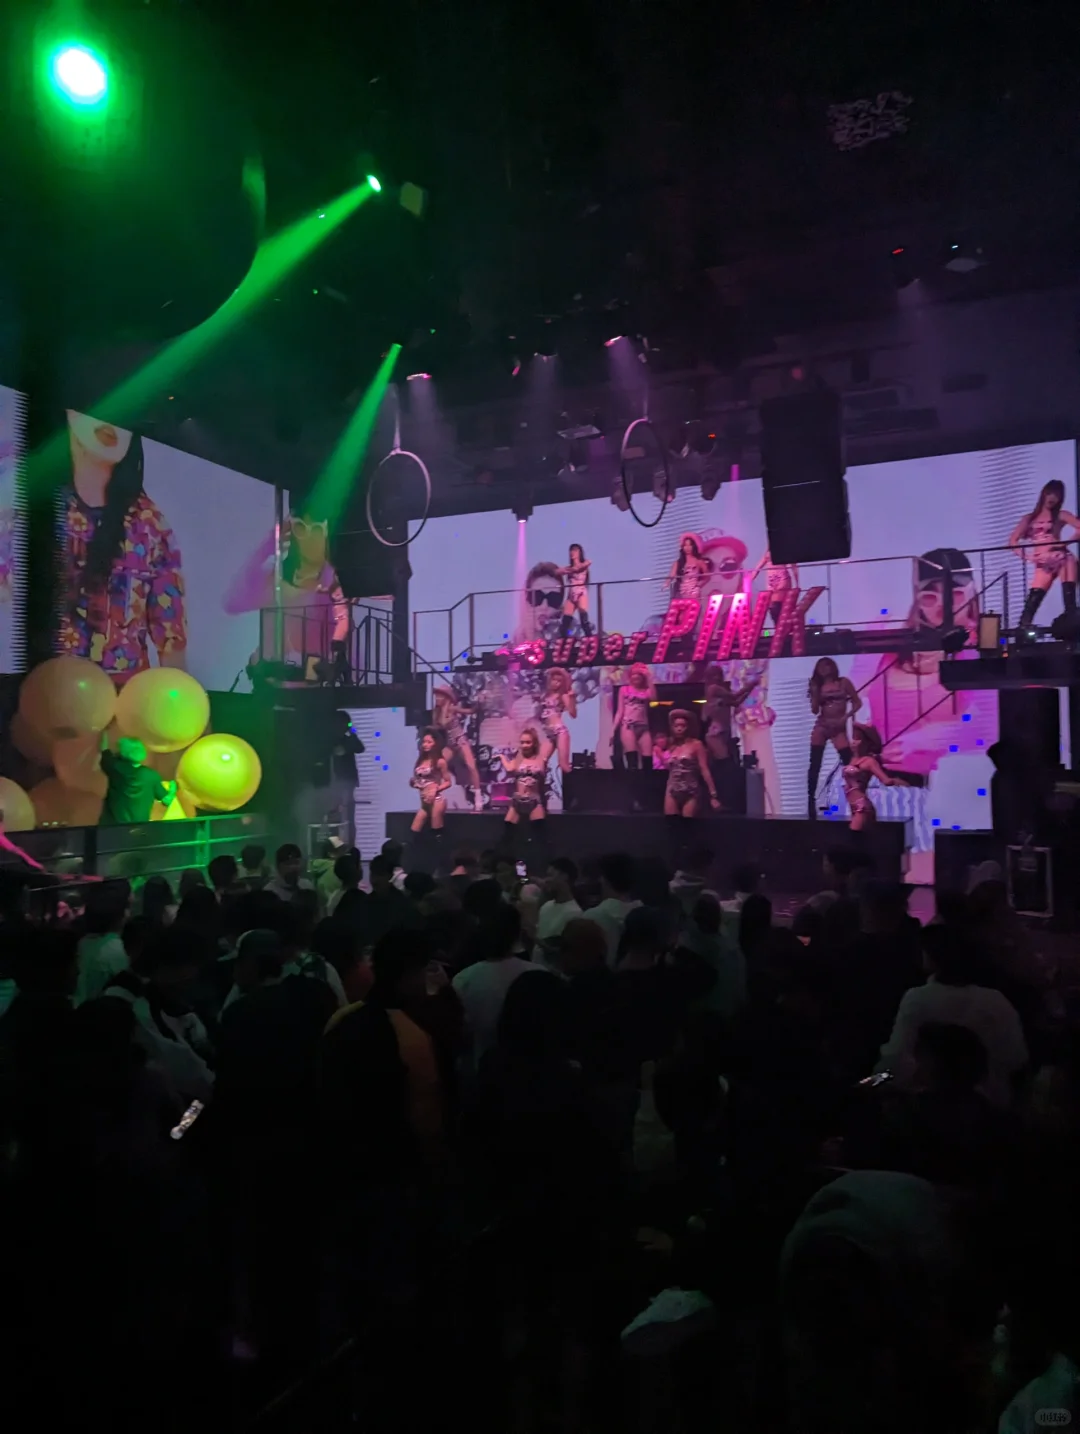 Osaka-Japan's big version of THE SUPERPINK nightclub, watch girls in short skirts dancing